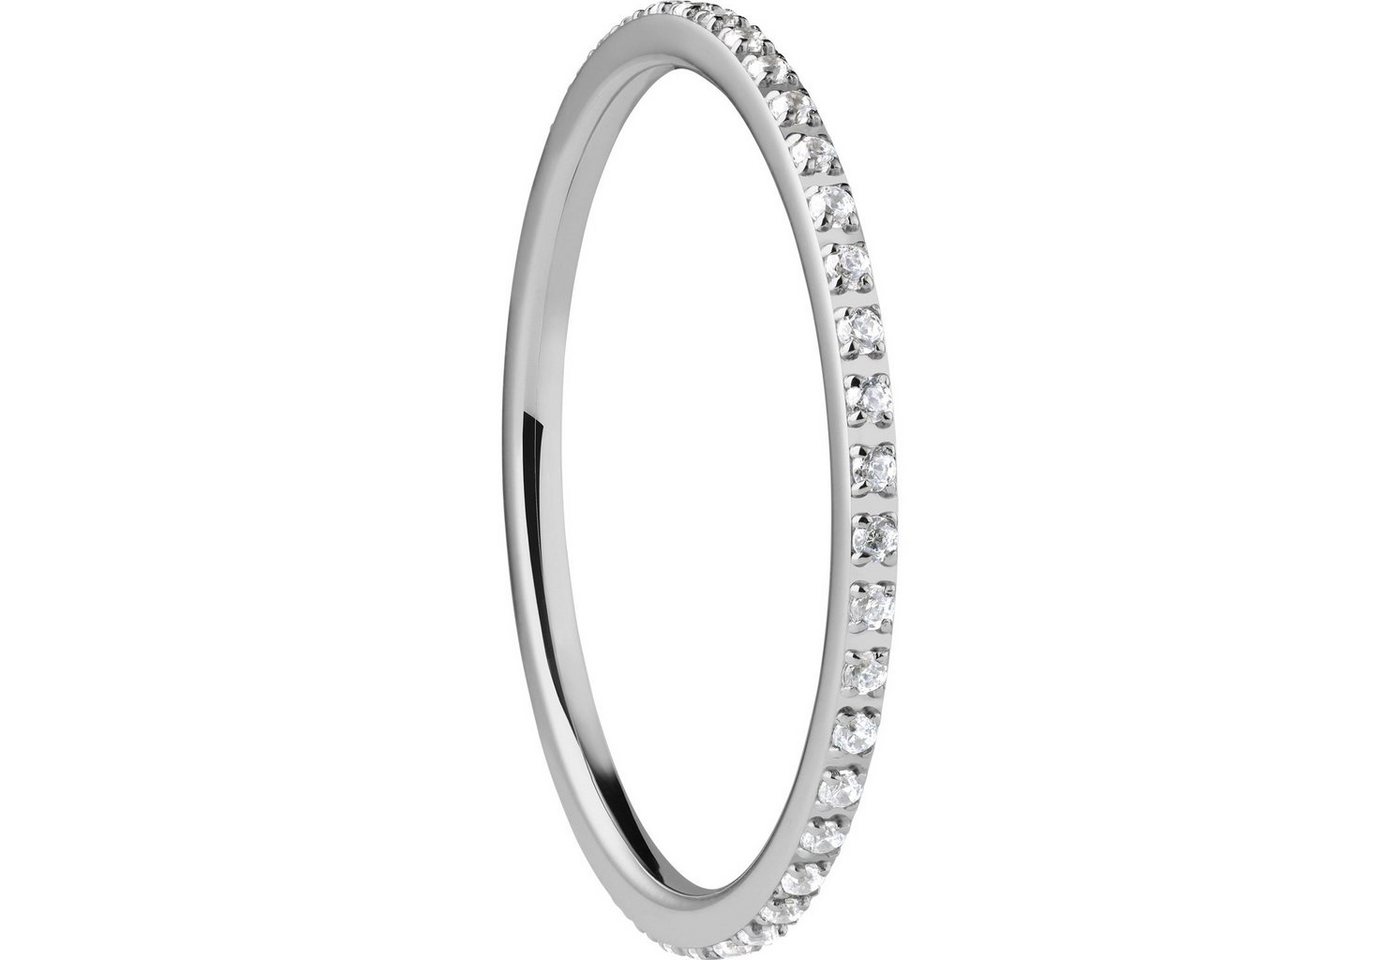 Bering Fingerring BERING / Jewelry / Detachable / Ring / Size 10 566-17-100 W68 von Bering